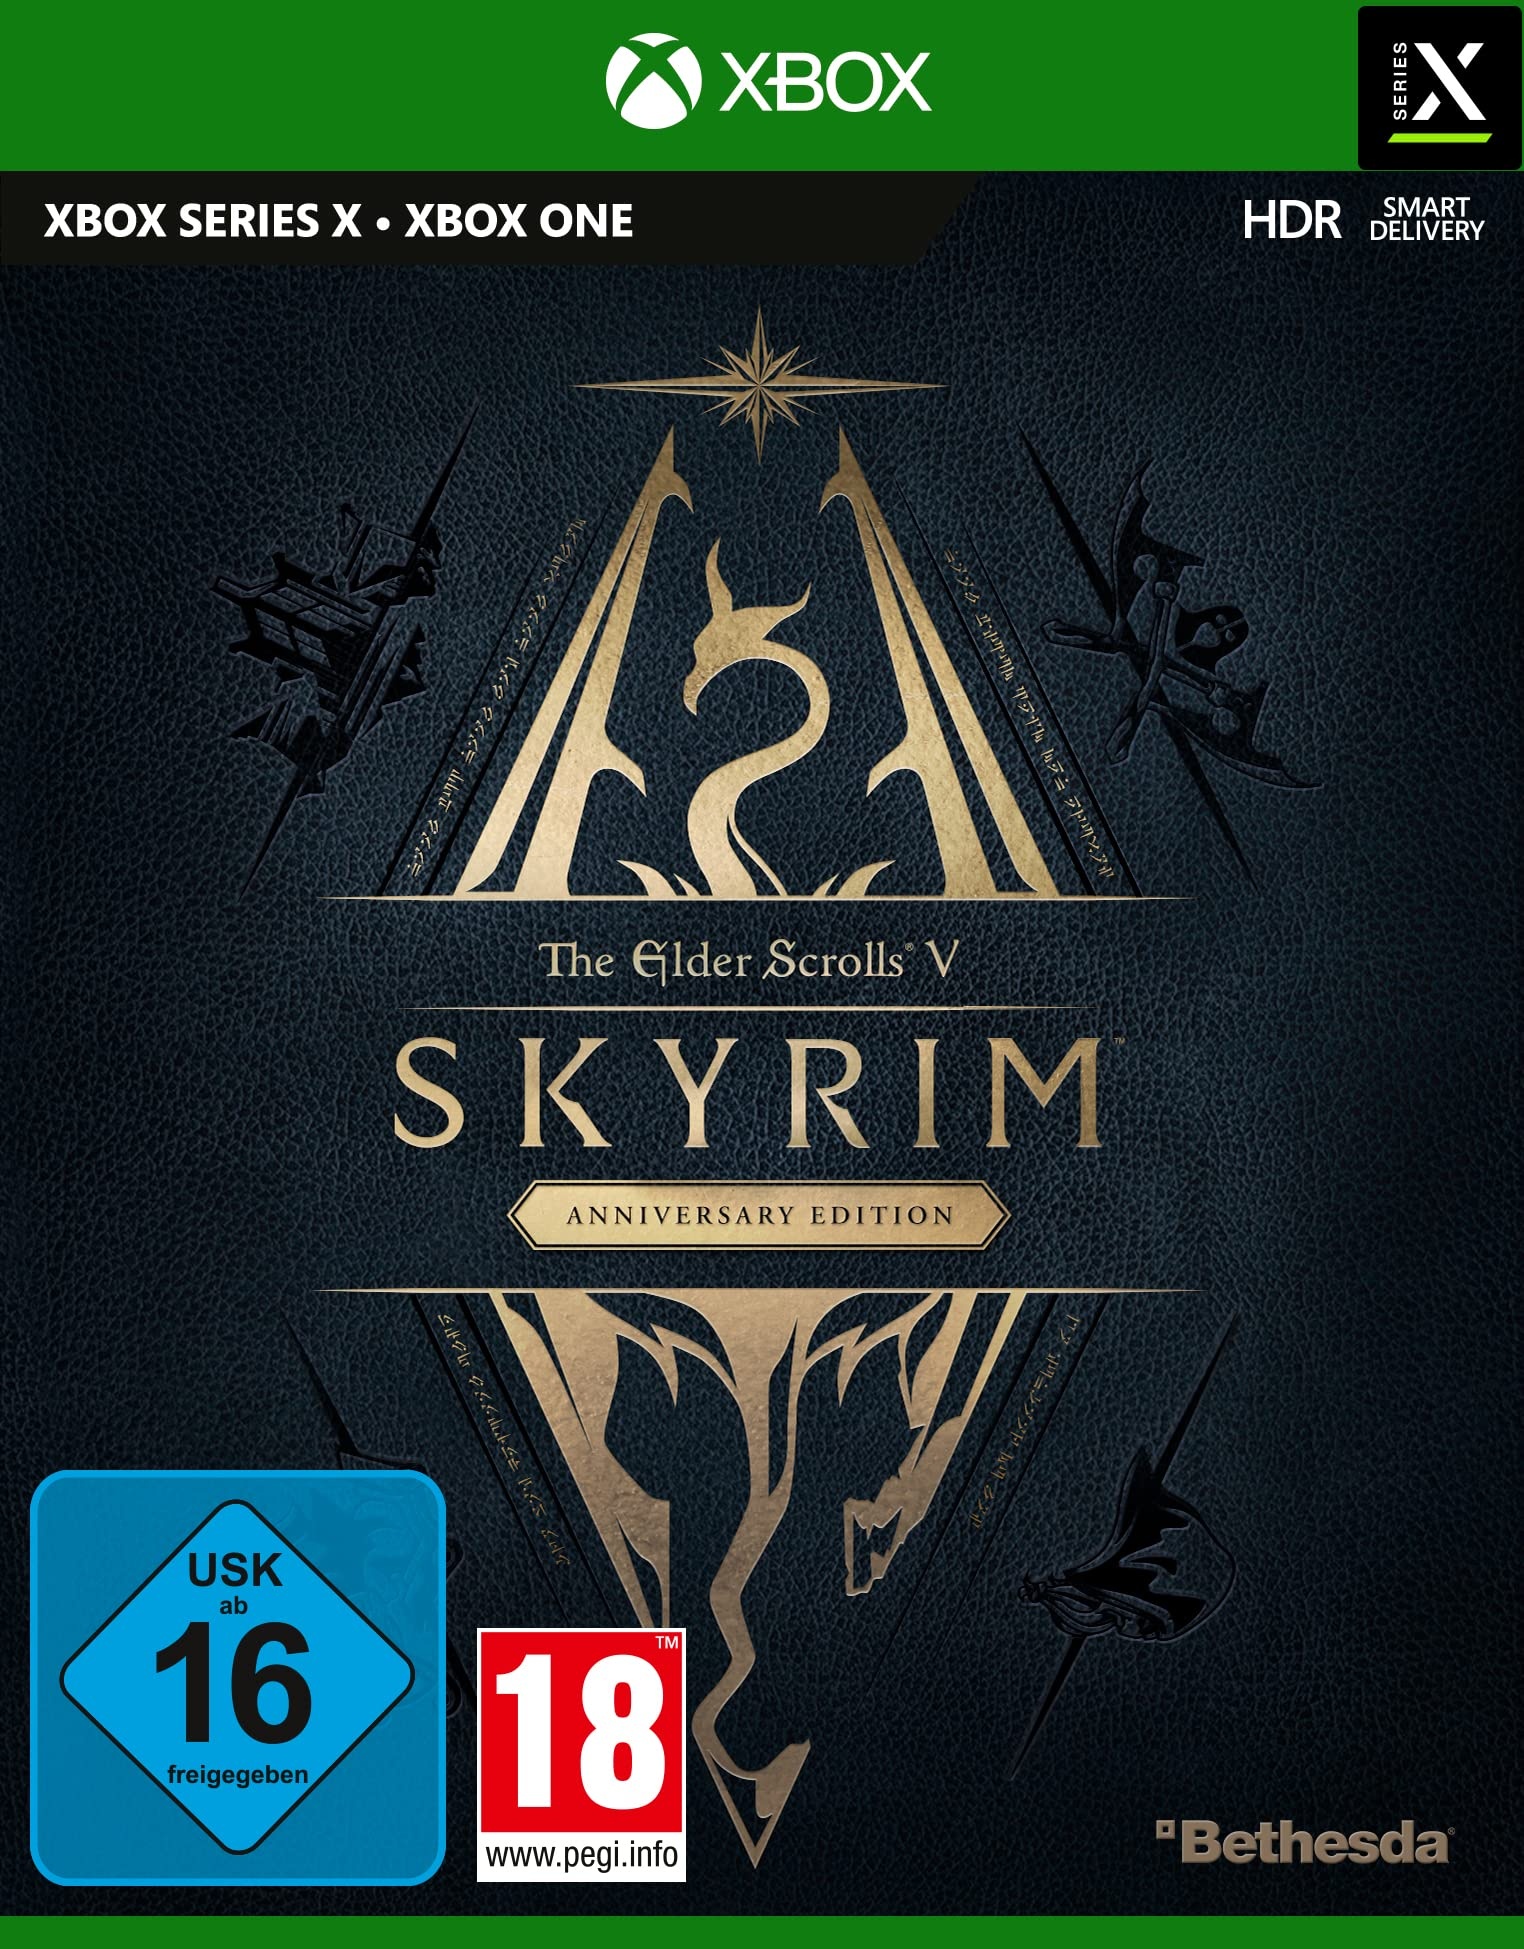 The Elder Scrolls V: Skyrim (Anniversary Edition) - [Xbox One] | kostenloses Upgrade auf Xbox Series X